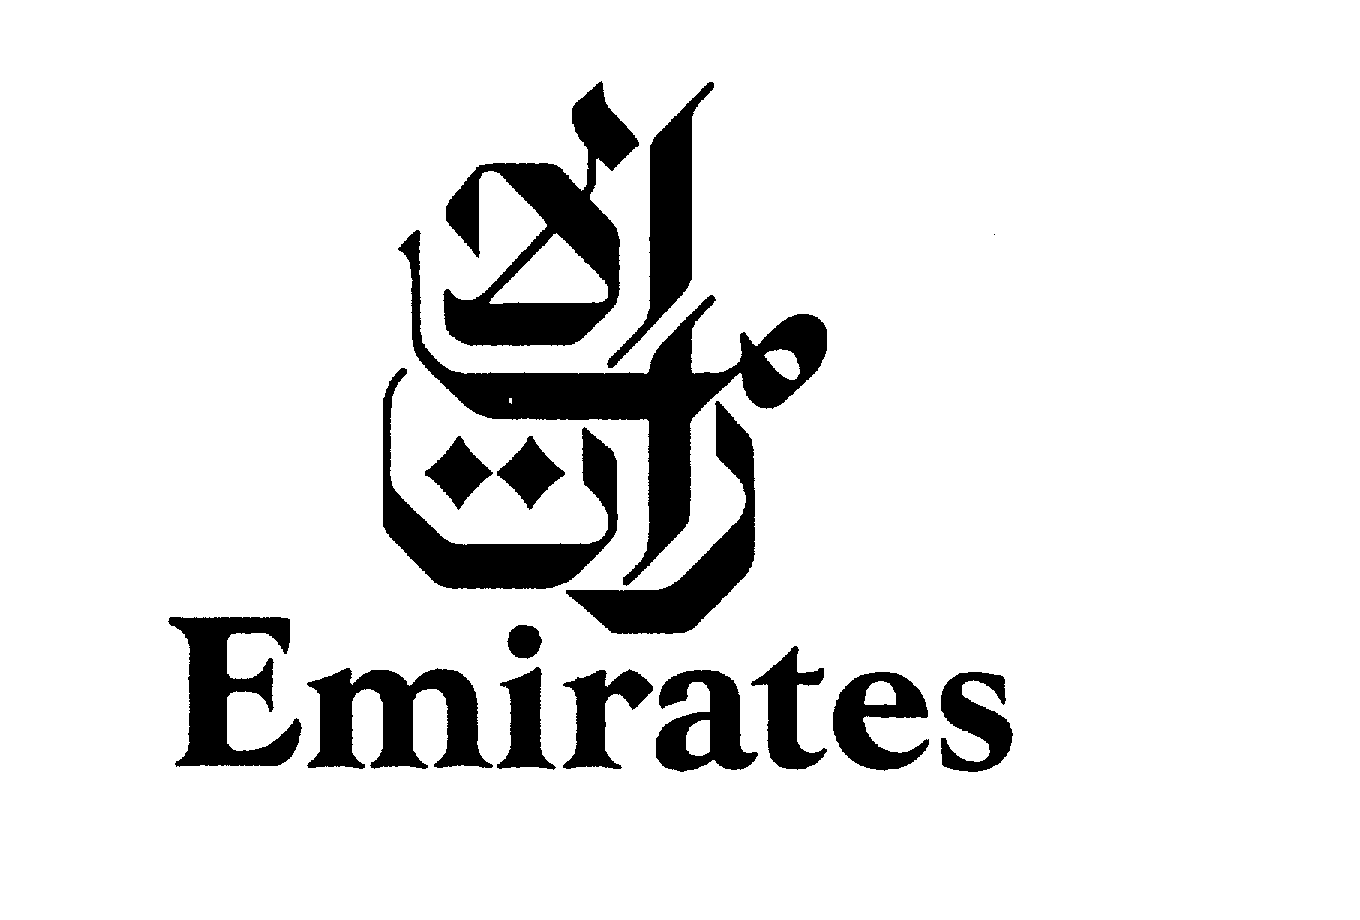 Trademark Logo EMIRATES